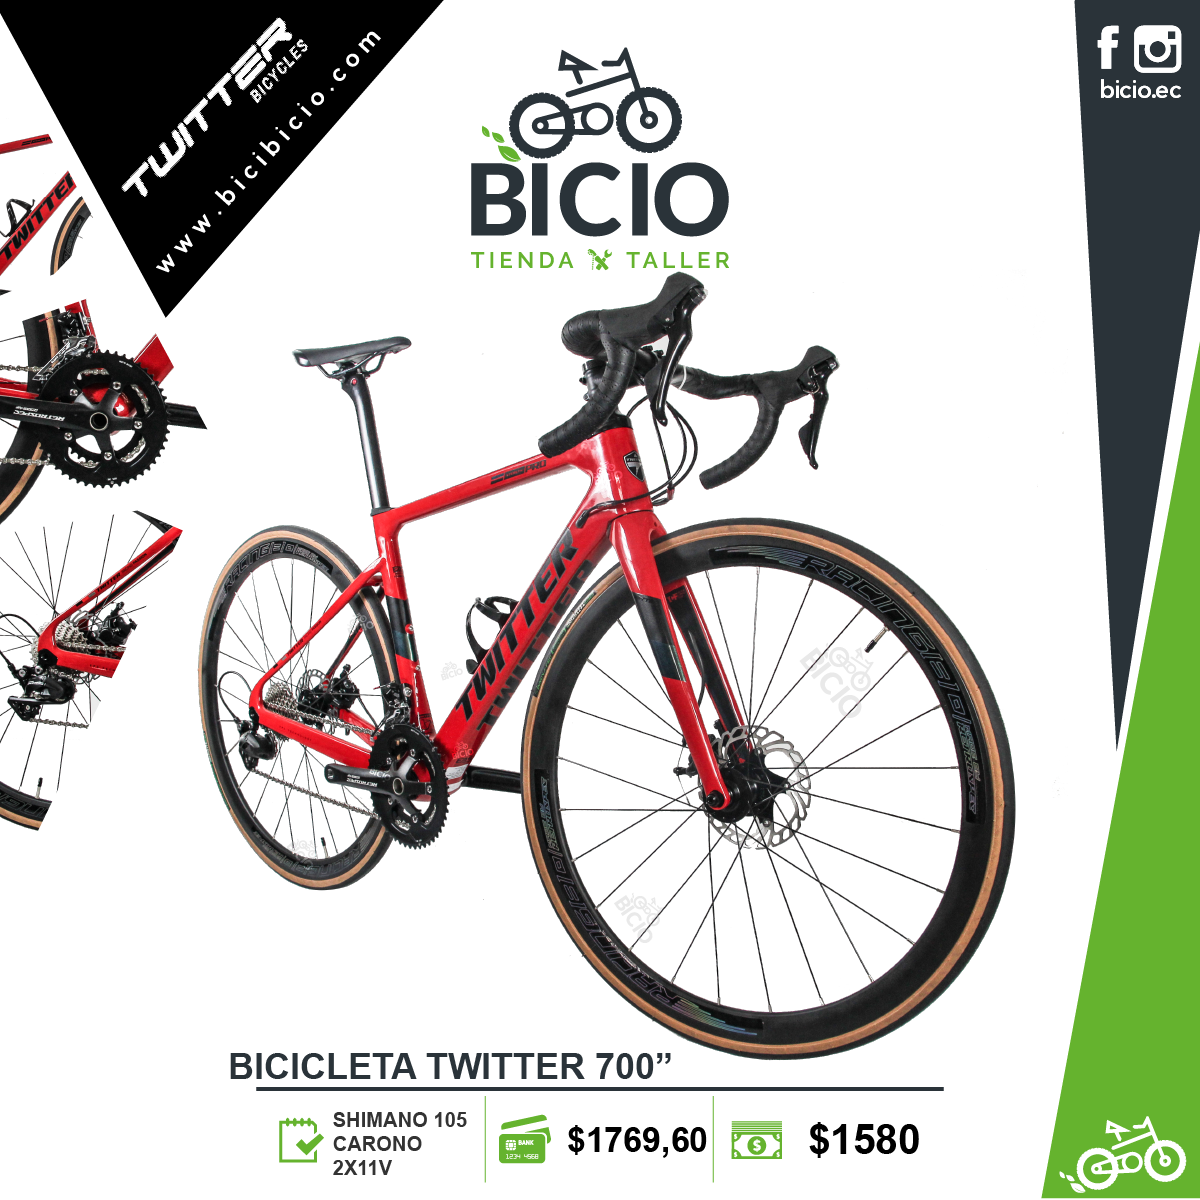 Ruta Twitter 700” SHIMANO 105 2X11 - Bicio tienda - taller bicicletas